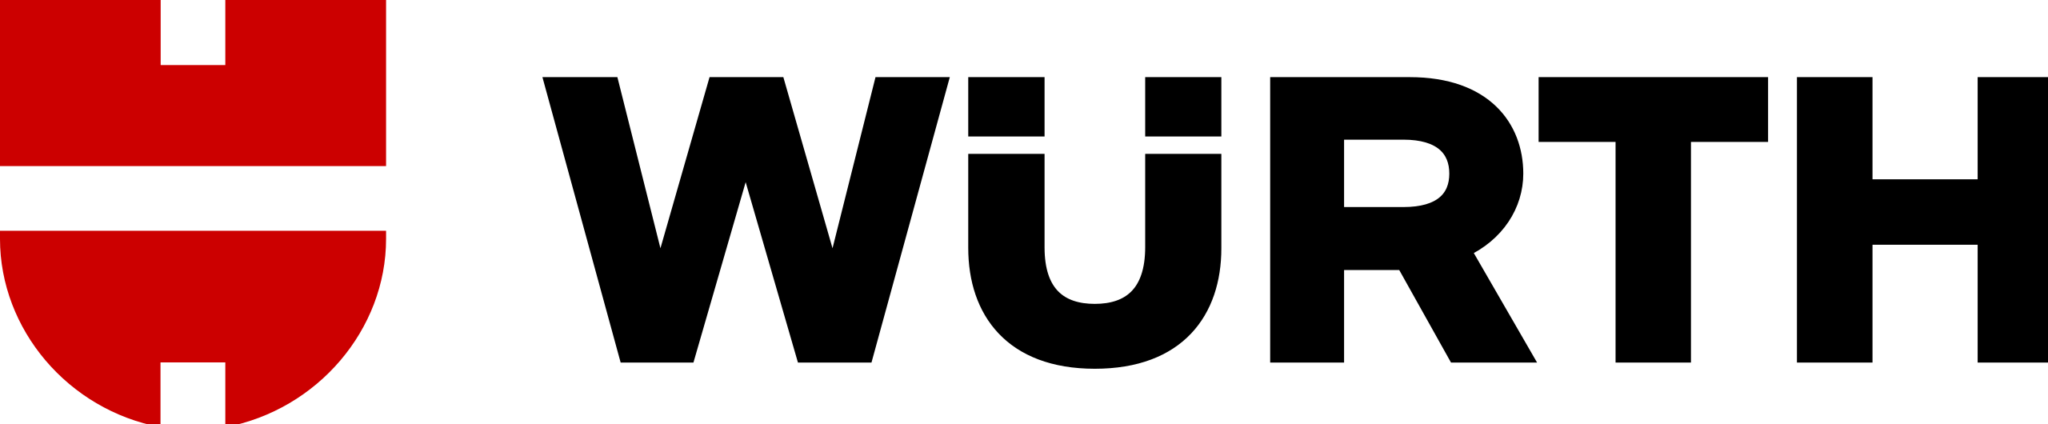 Würth Logo 2010 svg